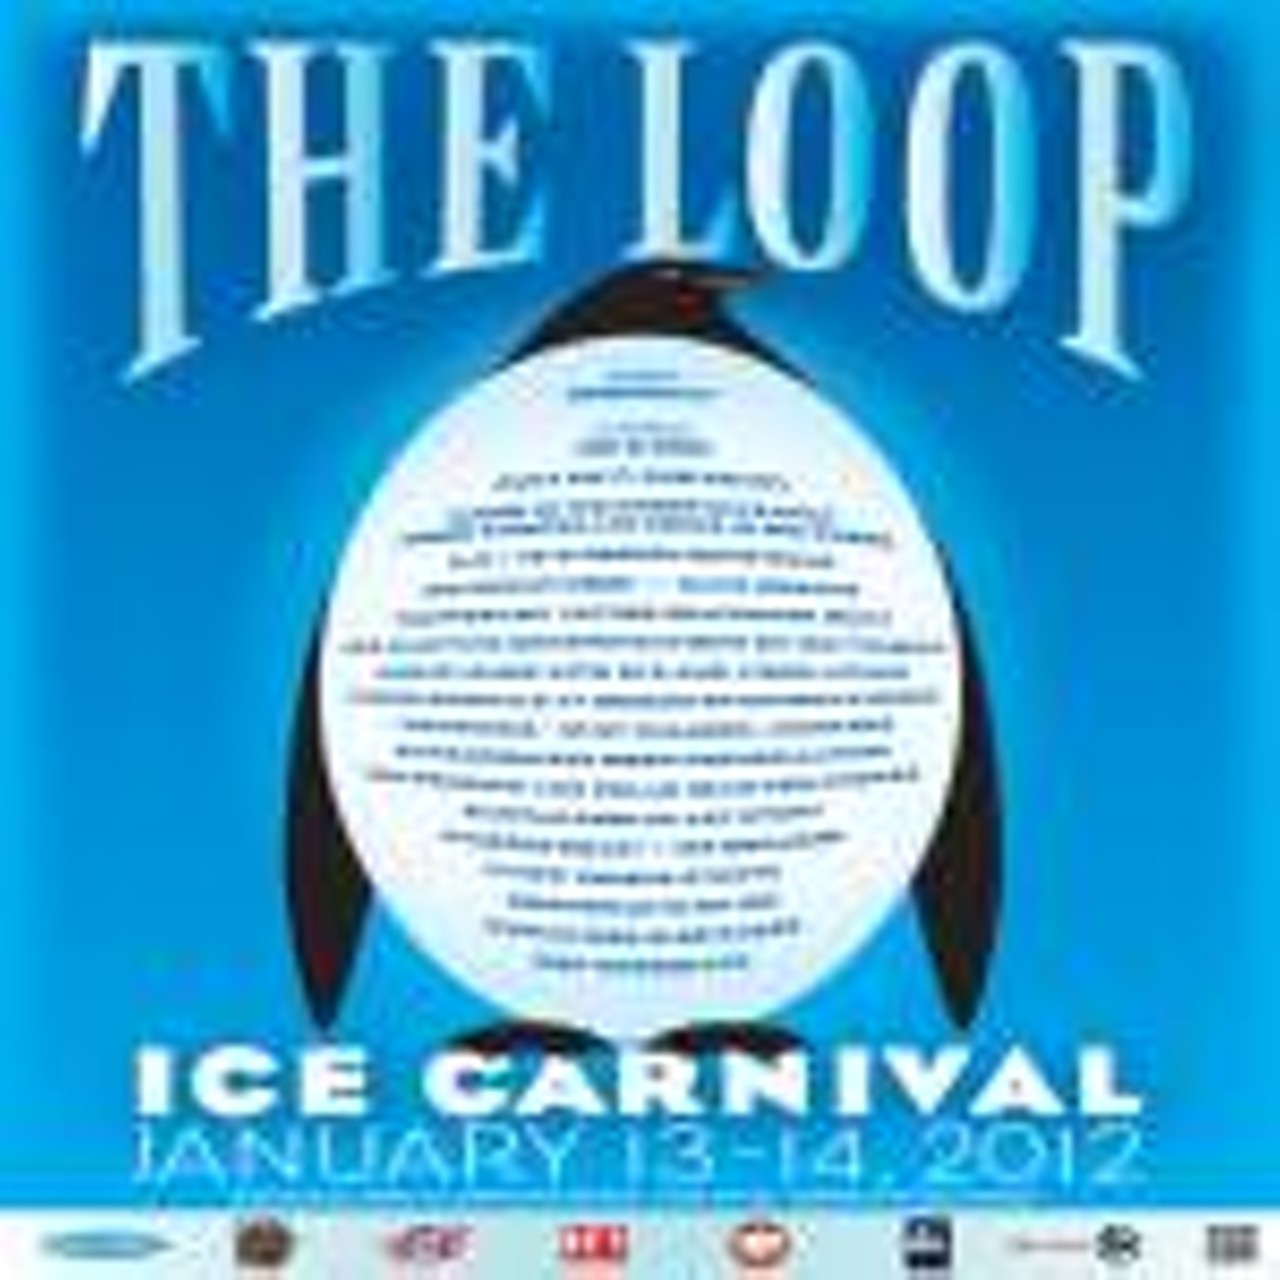 Loop Ice Carnival